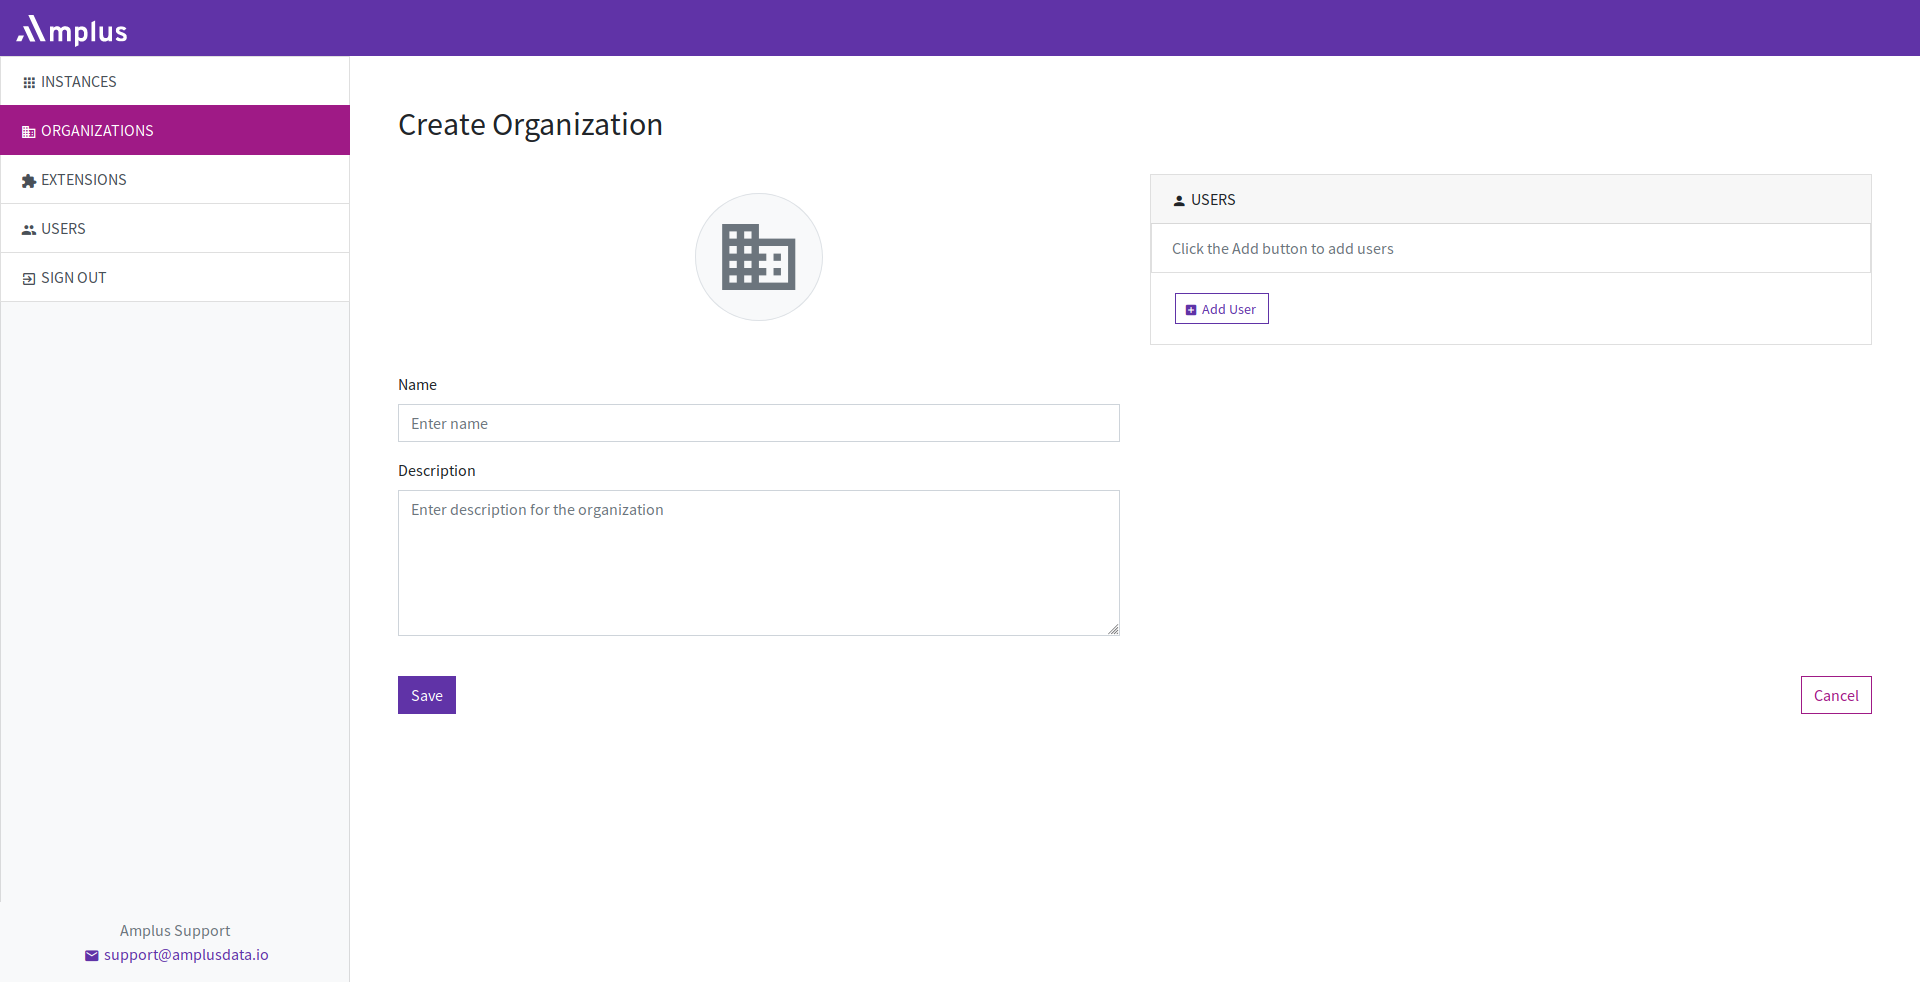 Image 7. Create Organization page